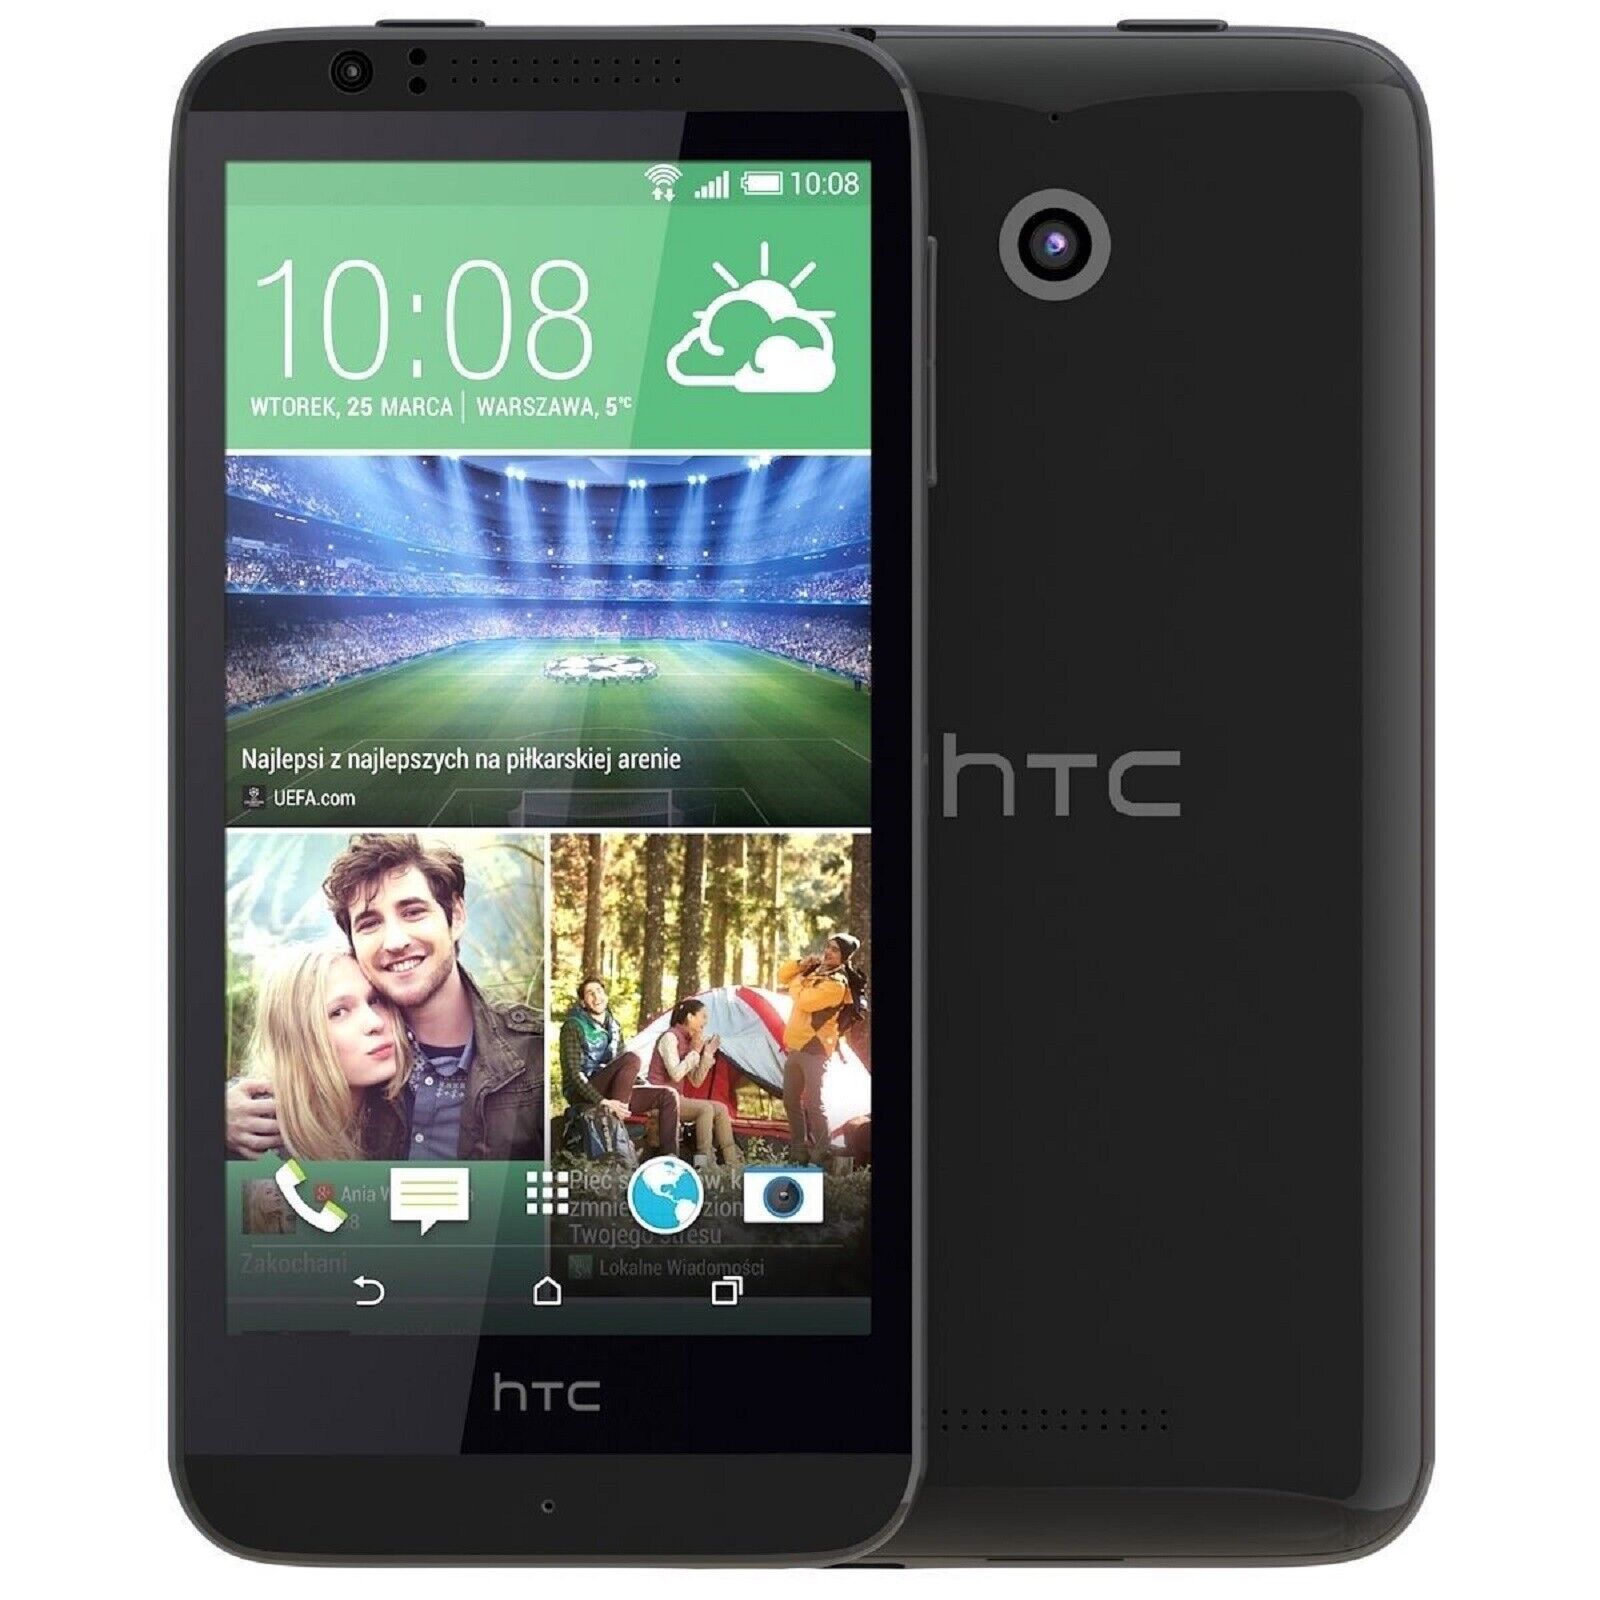 GOOD! HTC Desire 510 0PCV220 Android WIFI 4G LTE Camera Touch CRICKET Smartphone HTC HTC Desire 510 OPCV220